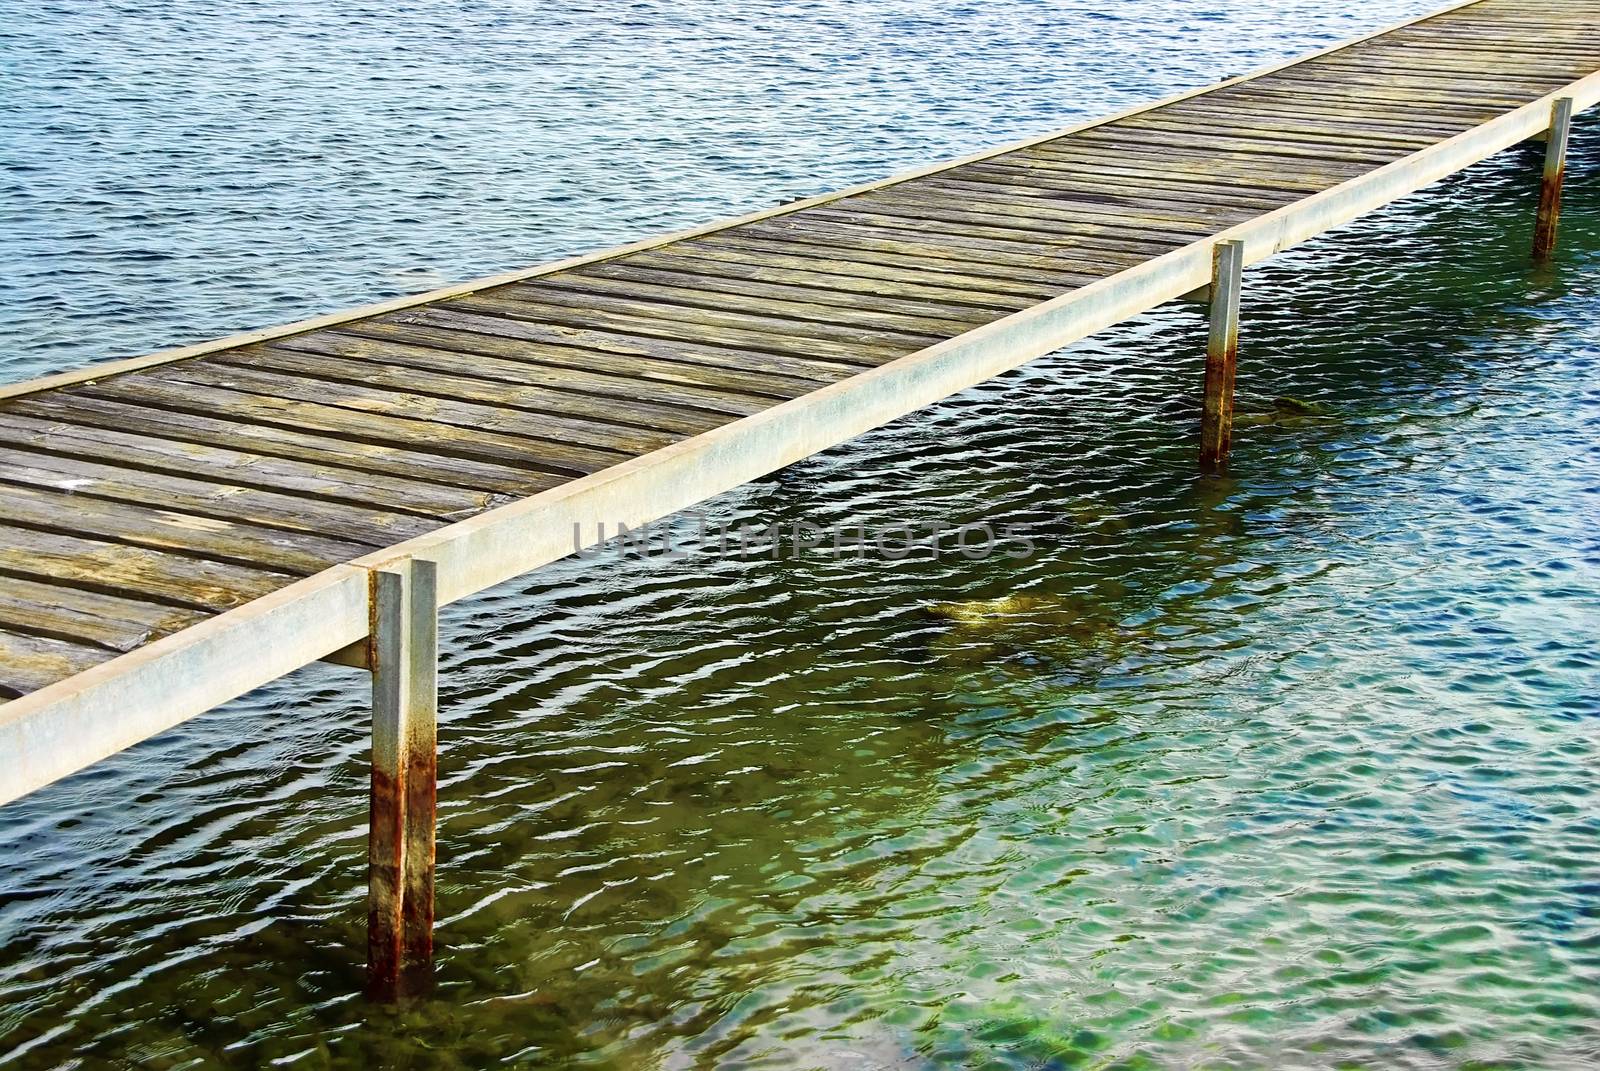 wooden catwalk ower the sea water